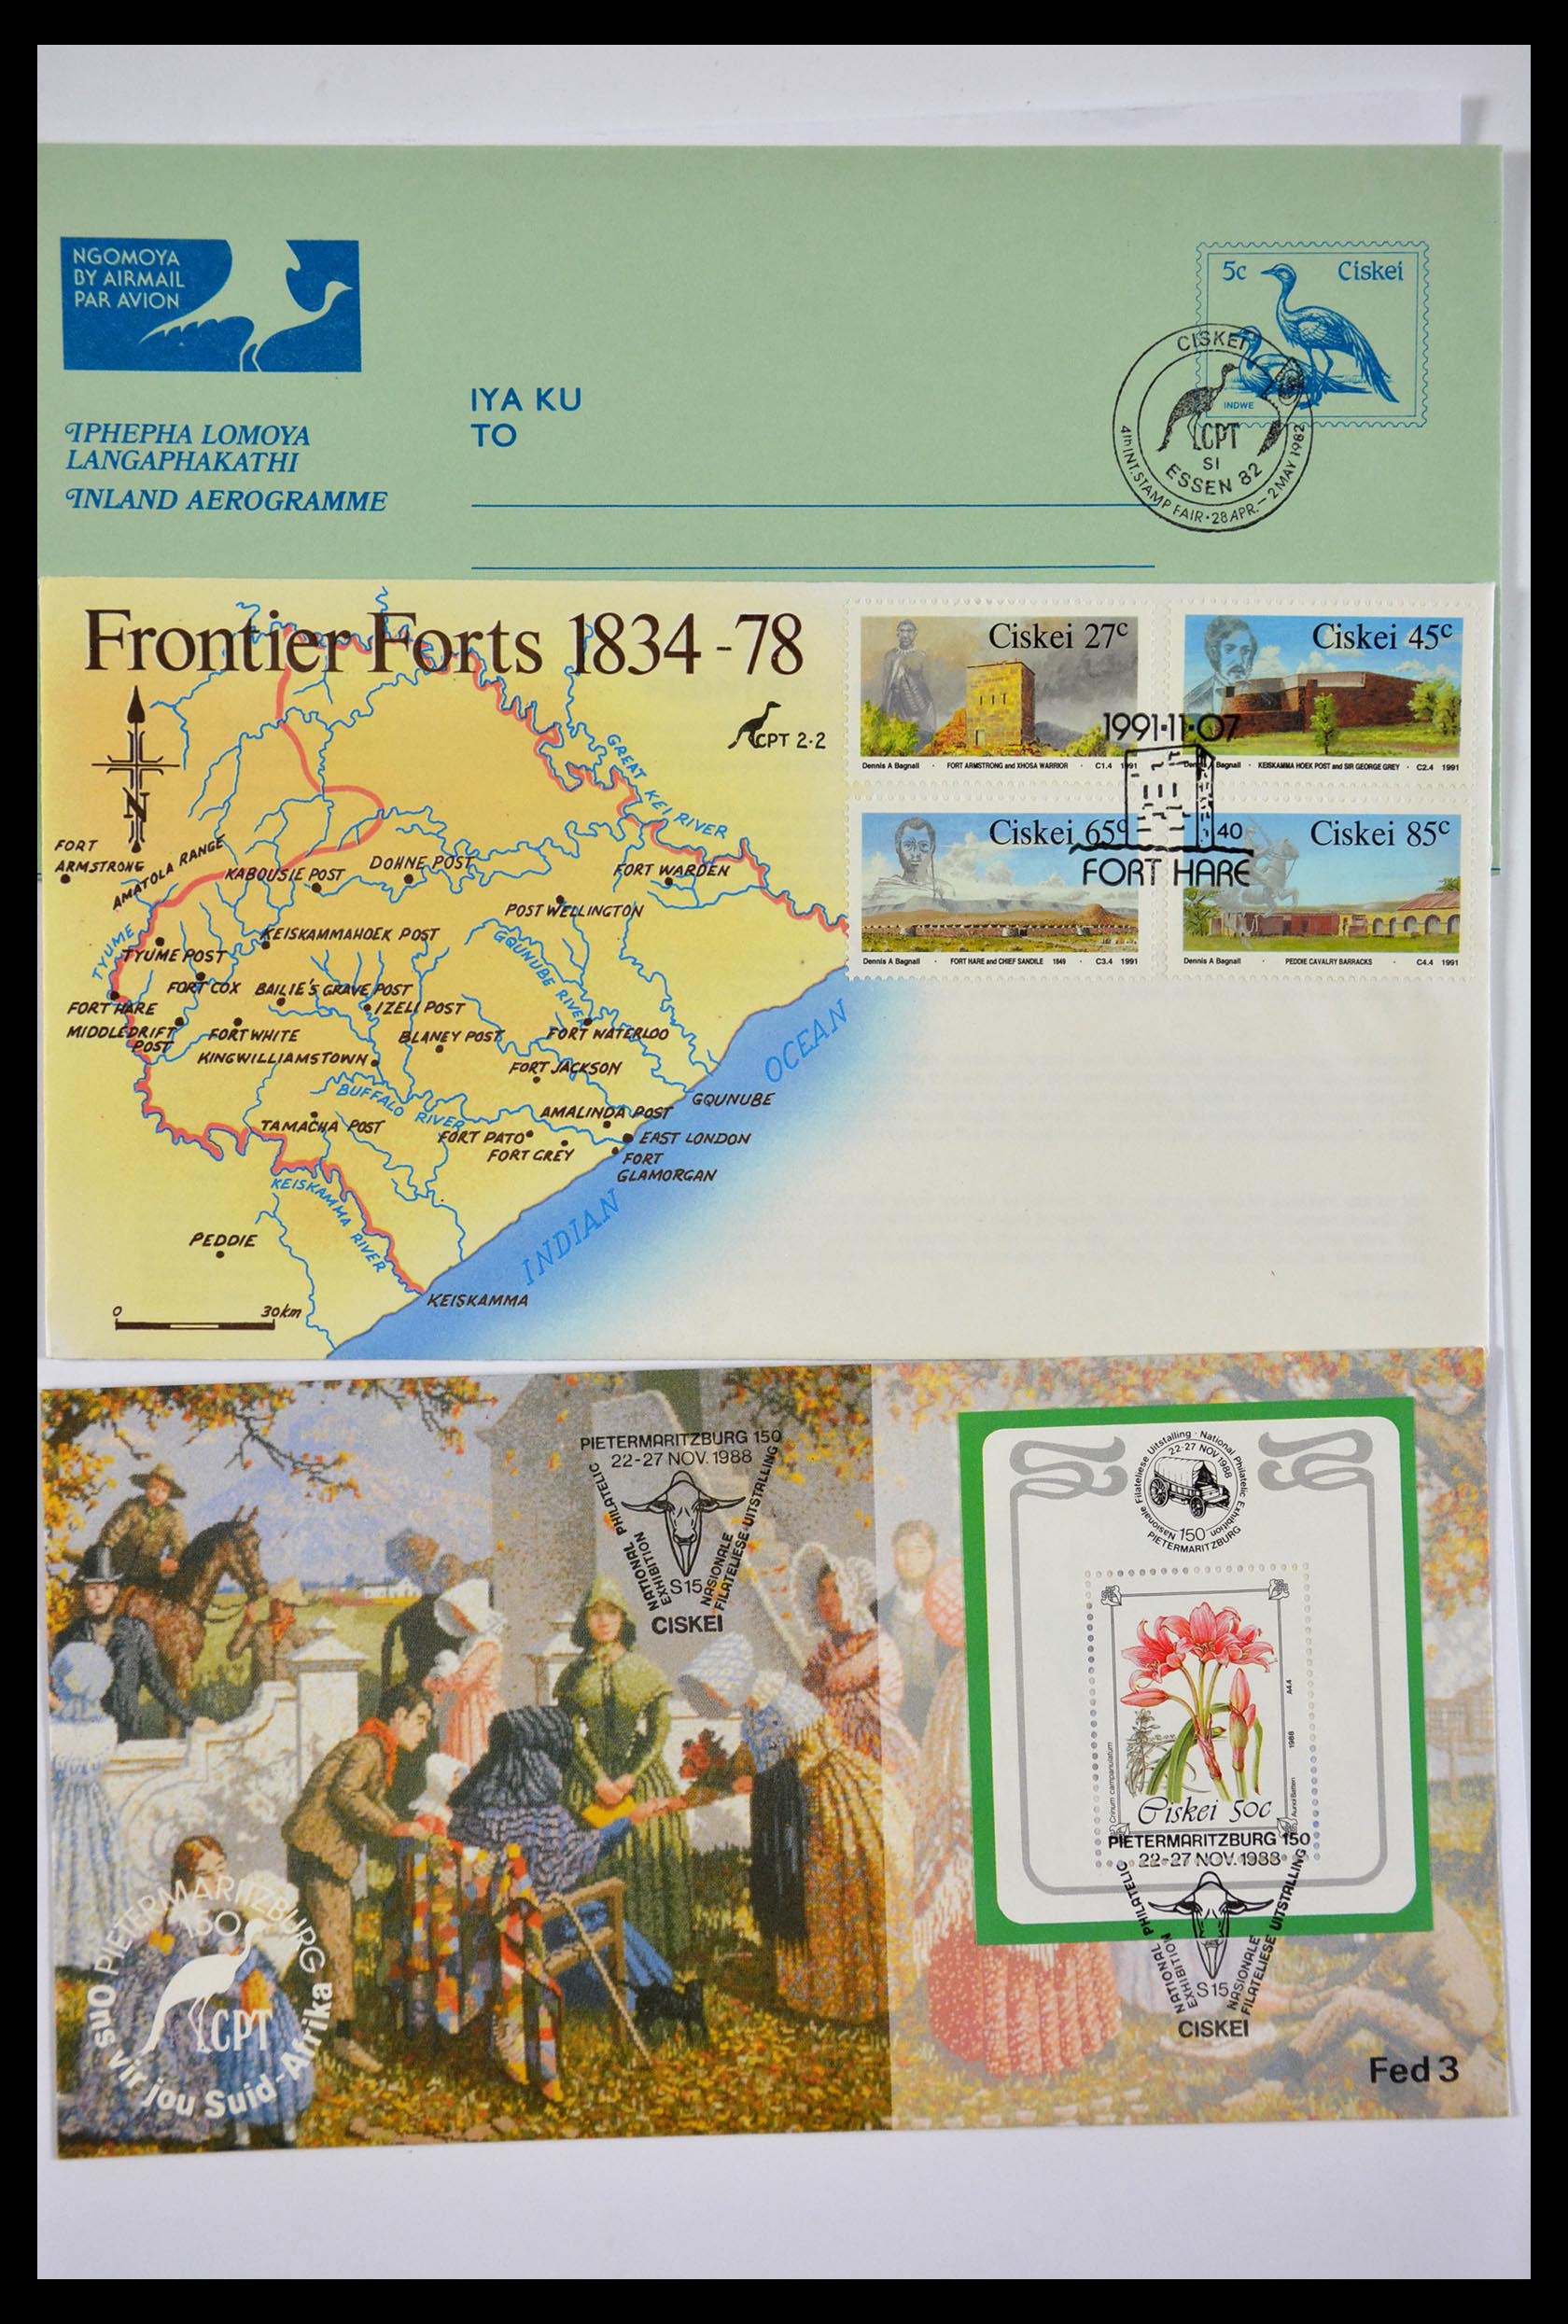 29356 502 - 29356 Zuid Afrika thuislanden fdc's 1979-1991.